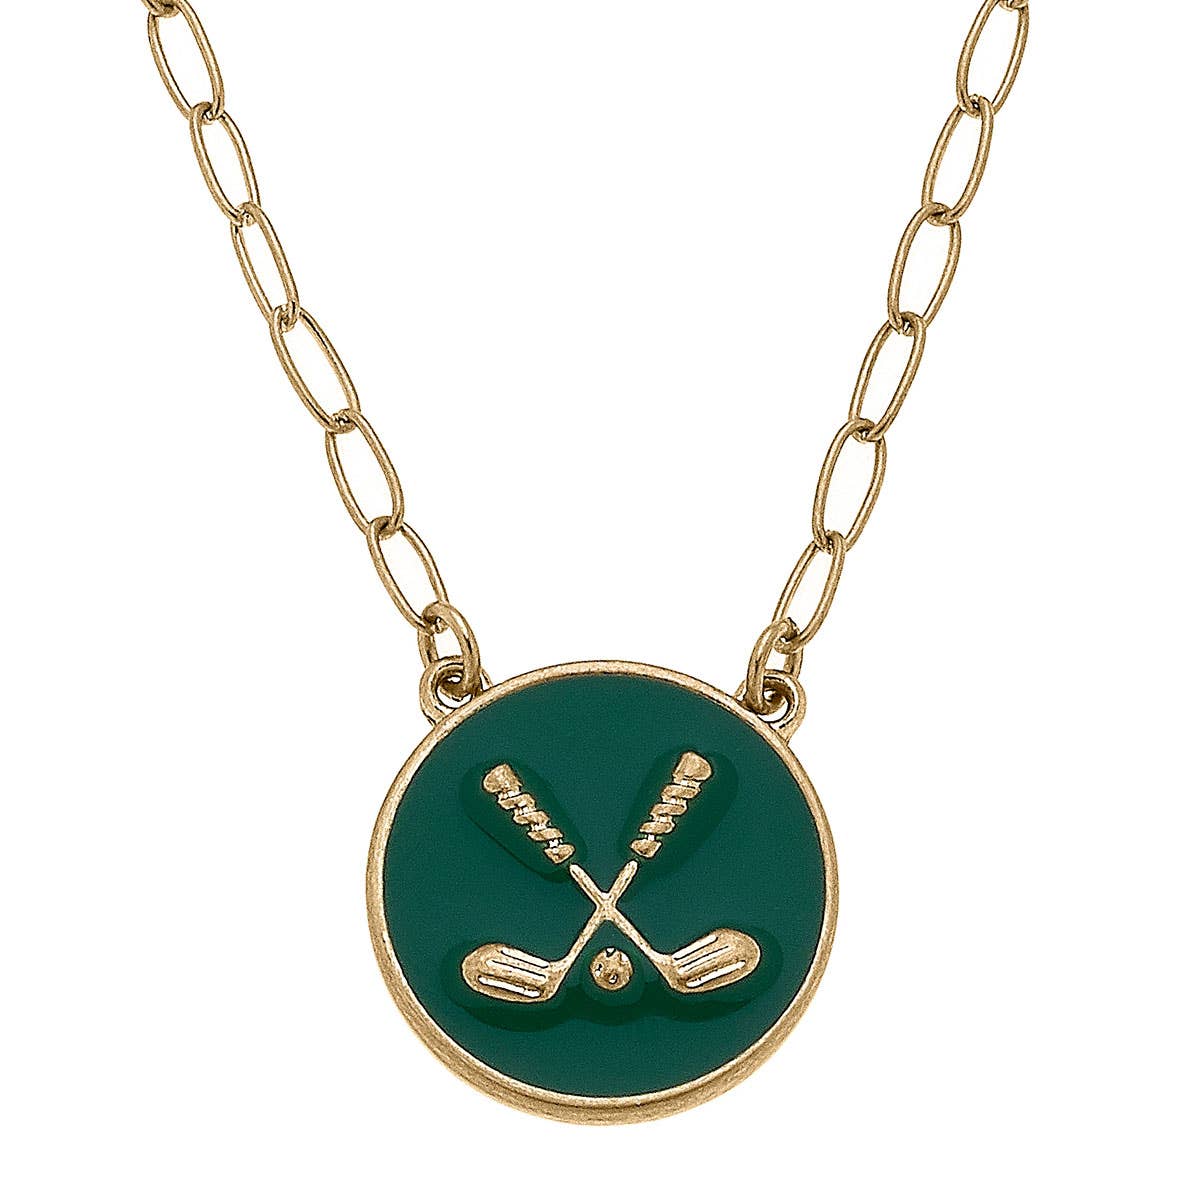 Paige Golf Clubs Enamel Pendant Necklace: Green